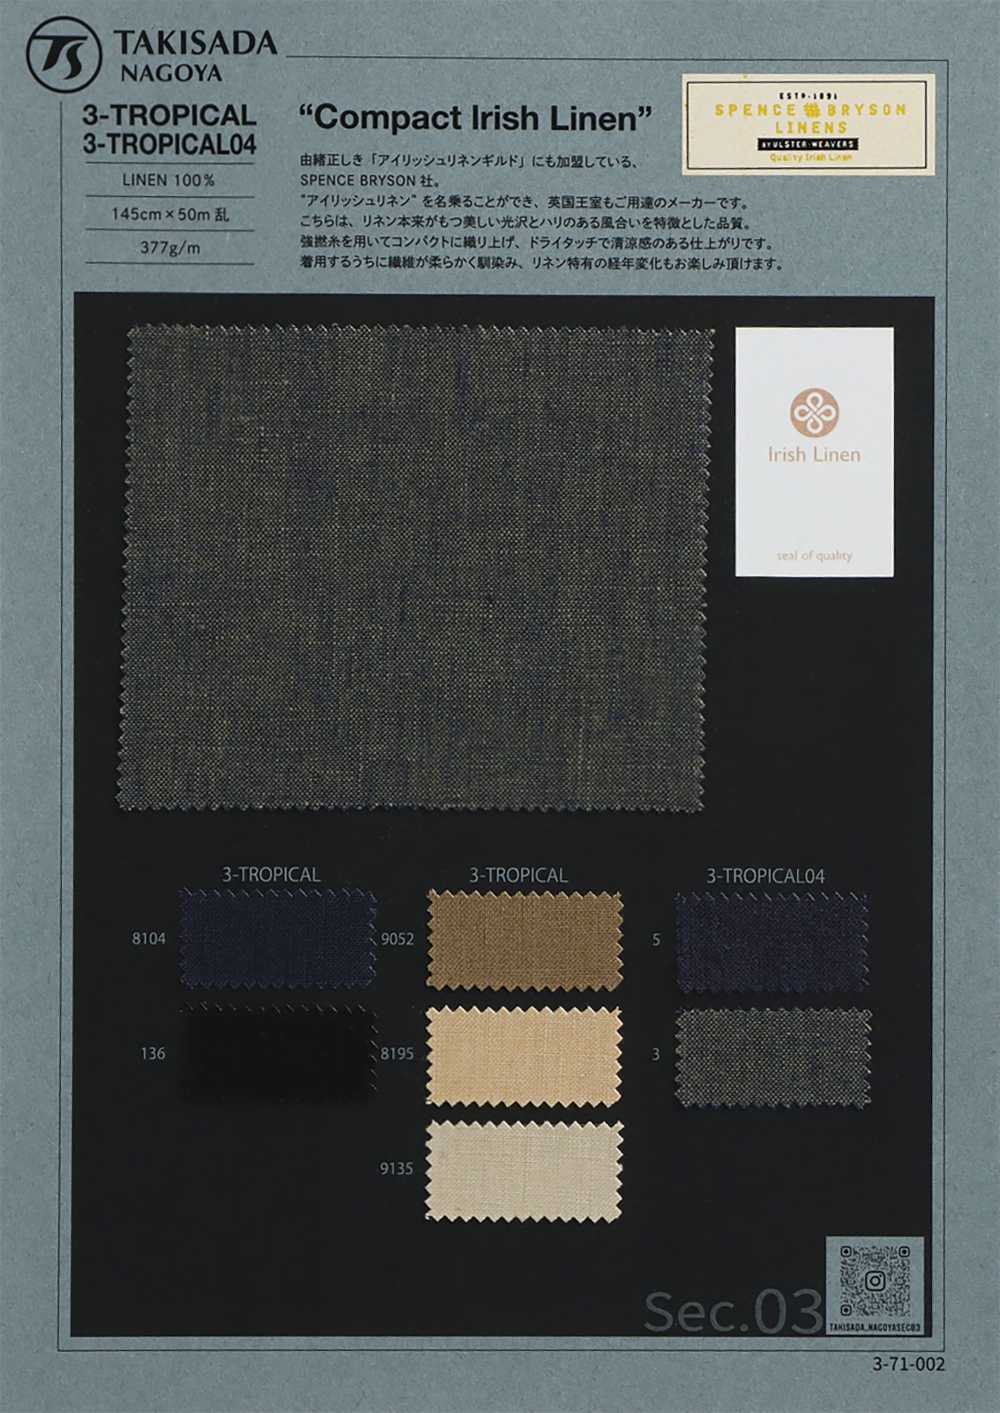 3-TROPICAL04 SPENCE BRYSON COMPACT IRISH LINEN IRISH LINEN Irish Linen Linen Tropical Chambray Strong Twisted Yar[Textile / Fabric] Takisada Nagoya